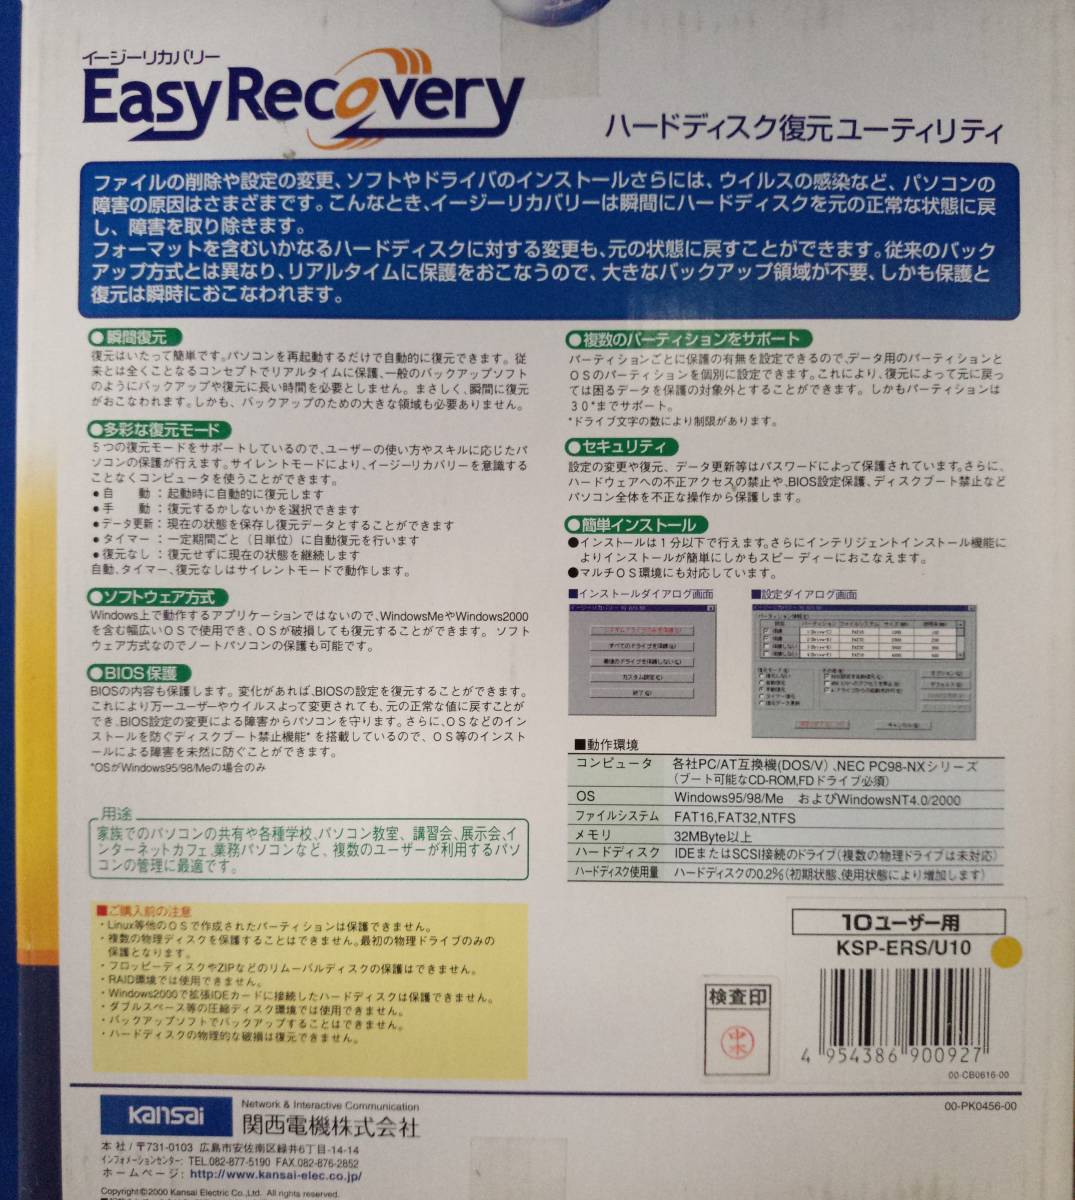 kansai Easy Recovery hard disk restoration utility WindowsXP WindowsMe Windows2000 correspondence 